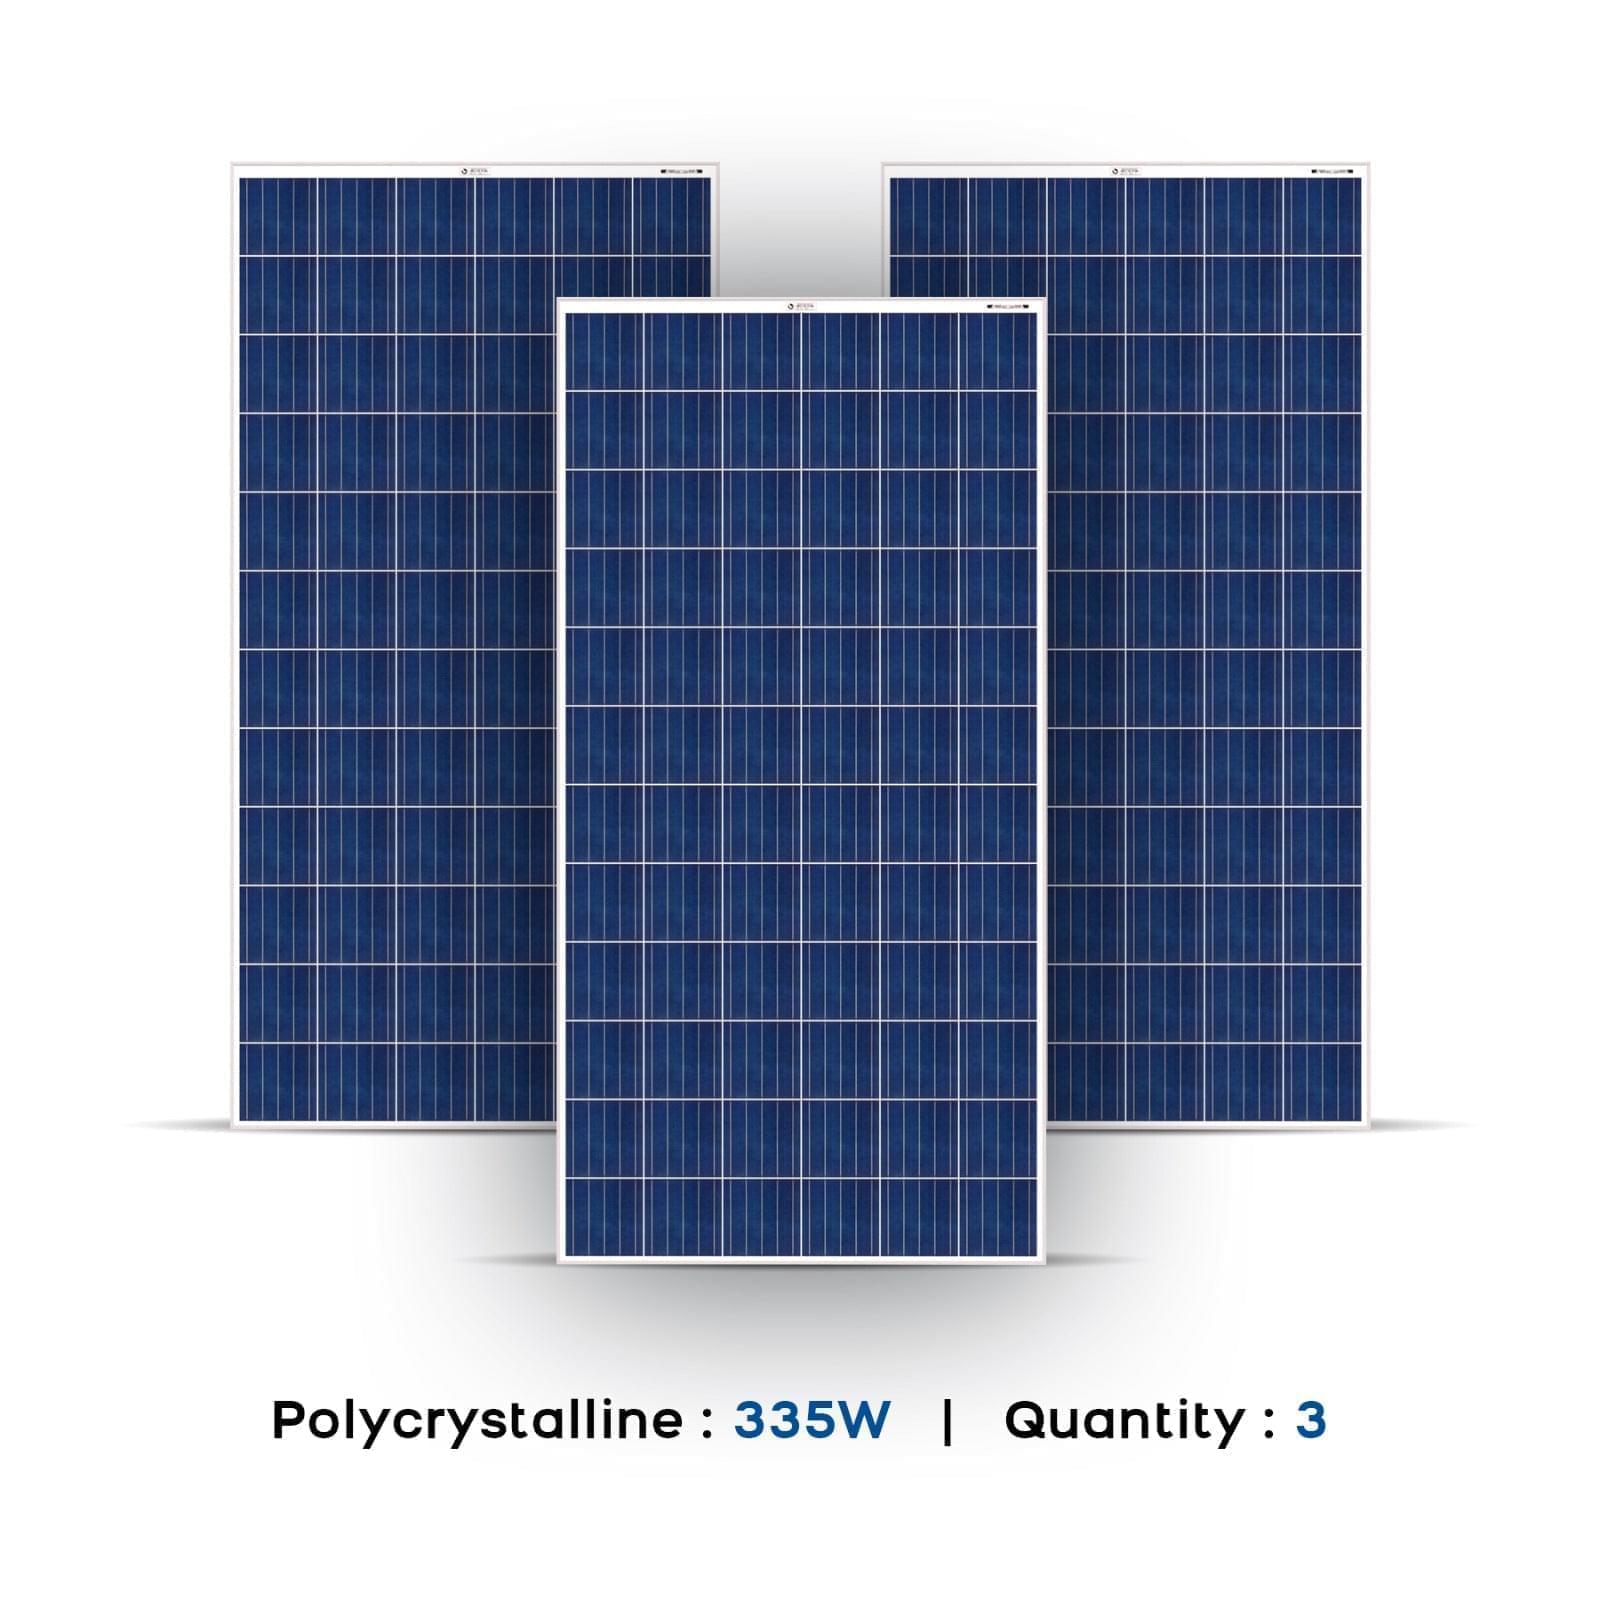 1 Kw Polycrystalline Solar Panel